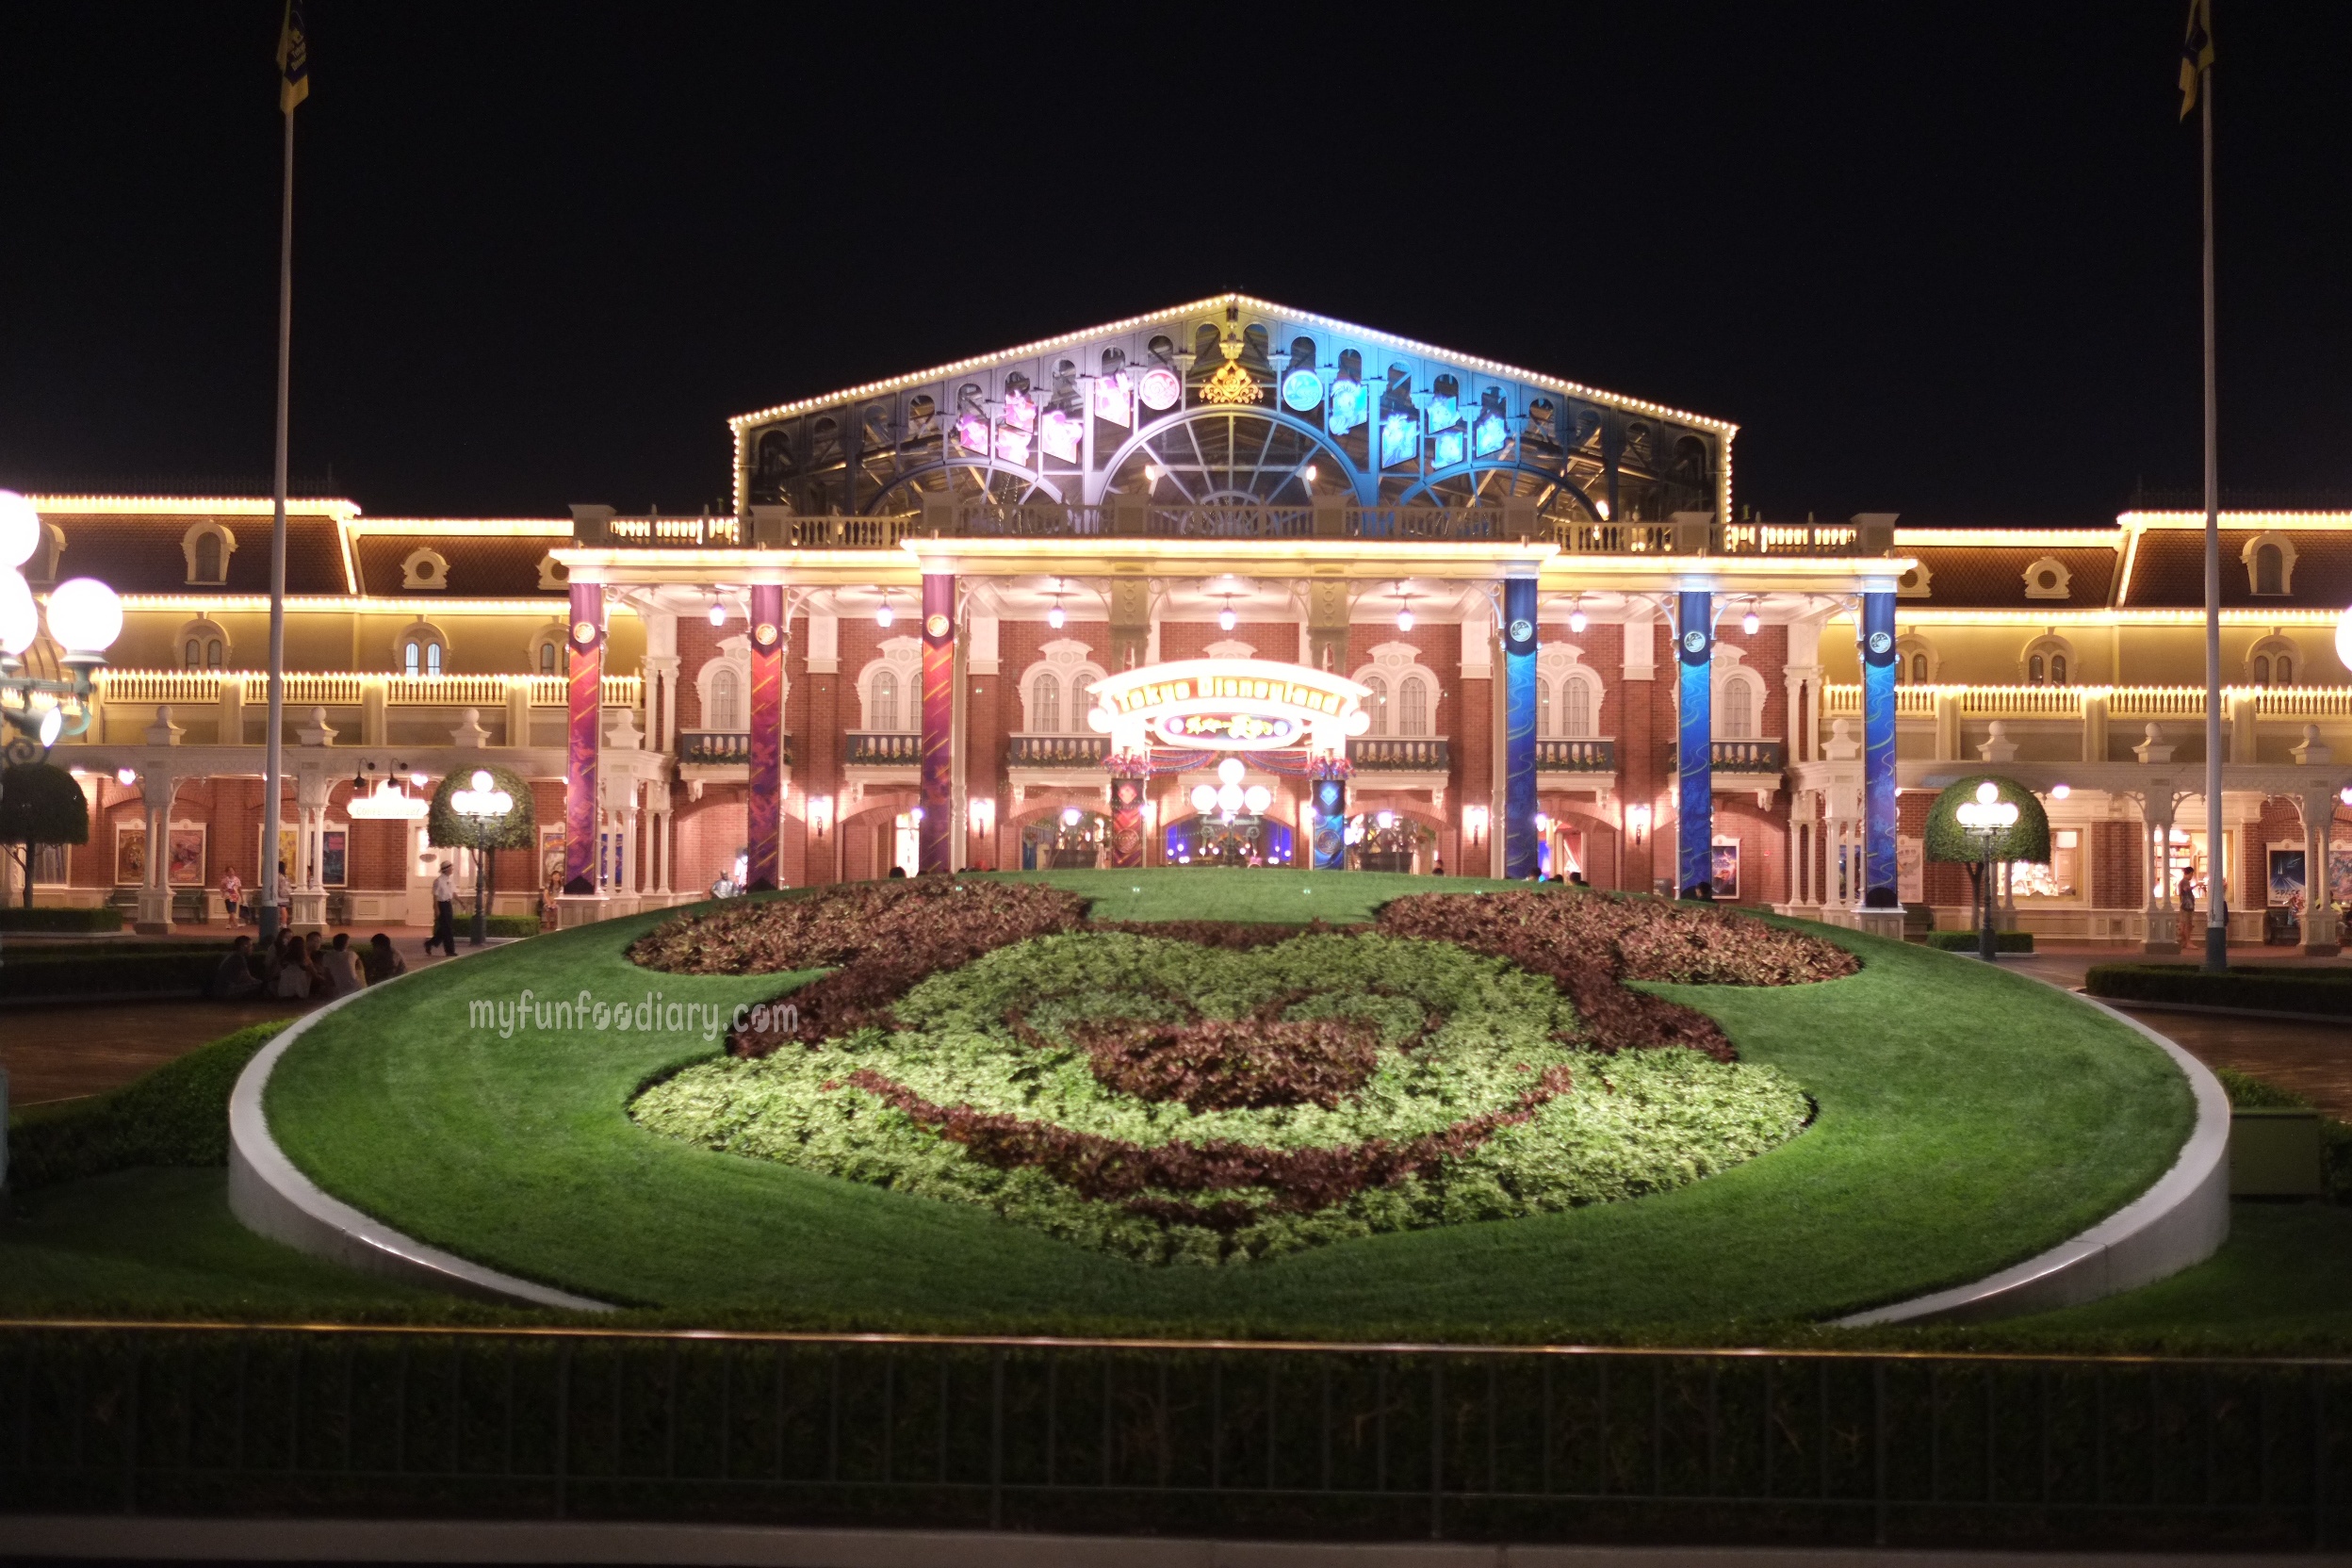 Mickeys Garden at Tokyo Disneyland by Myfunfoodiary